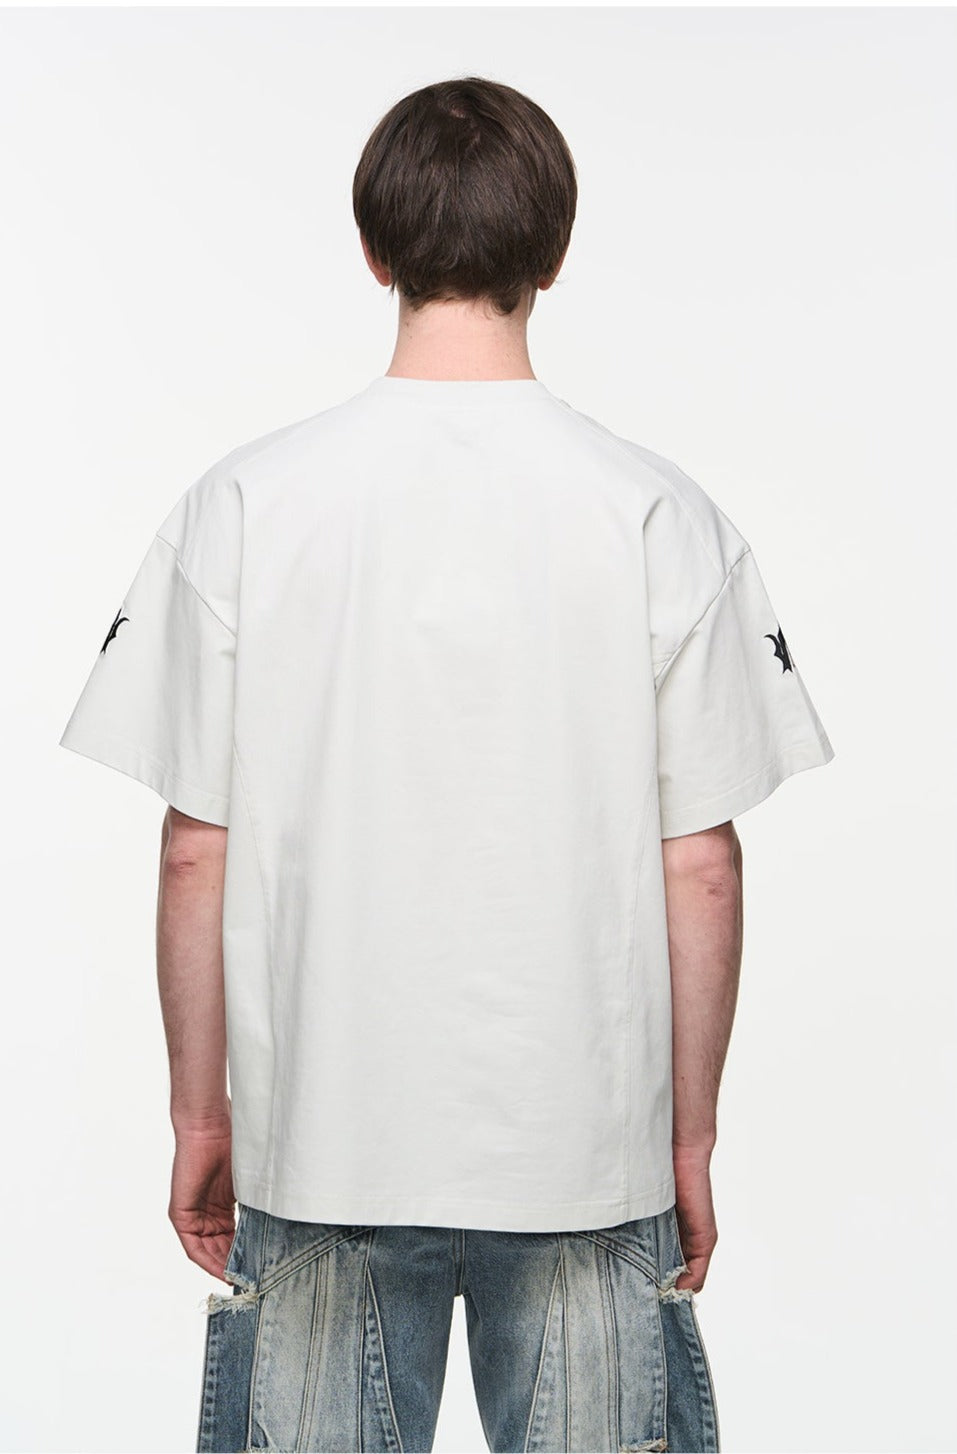 Flipped Logo Print T-Shirt Korean Street Fashion T-Shirt By Blind No Plan Shop Online at OH Vault